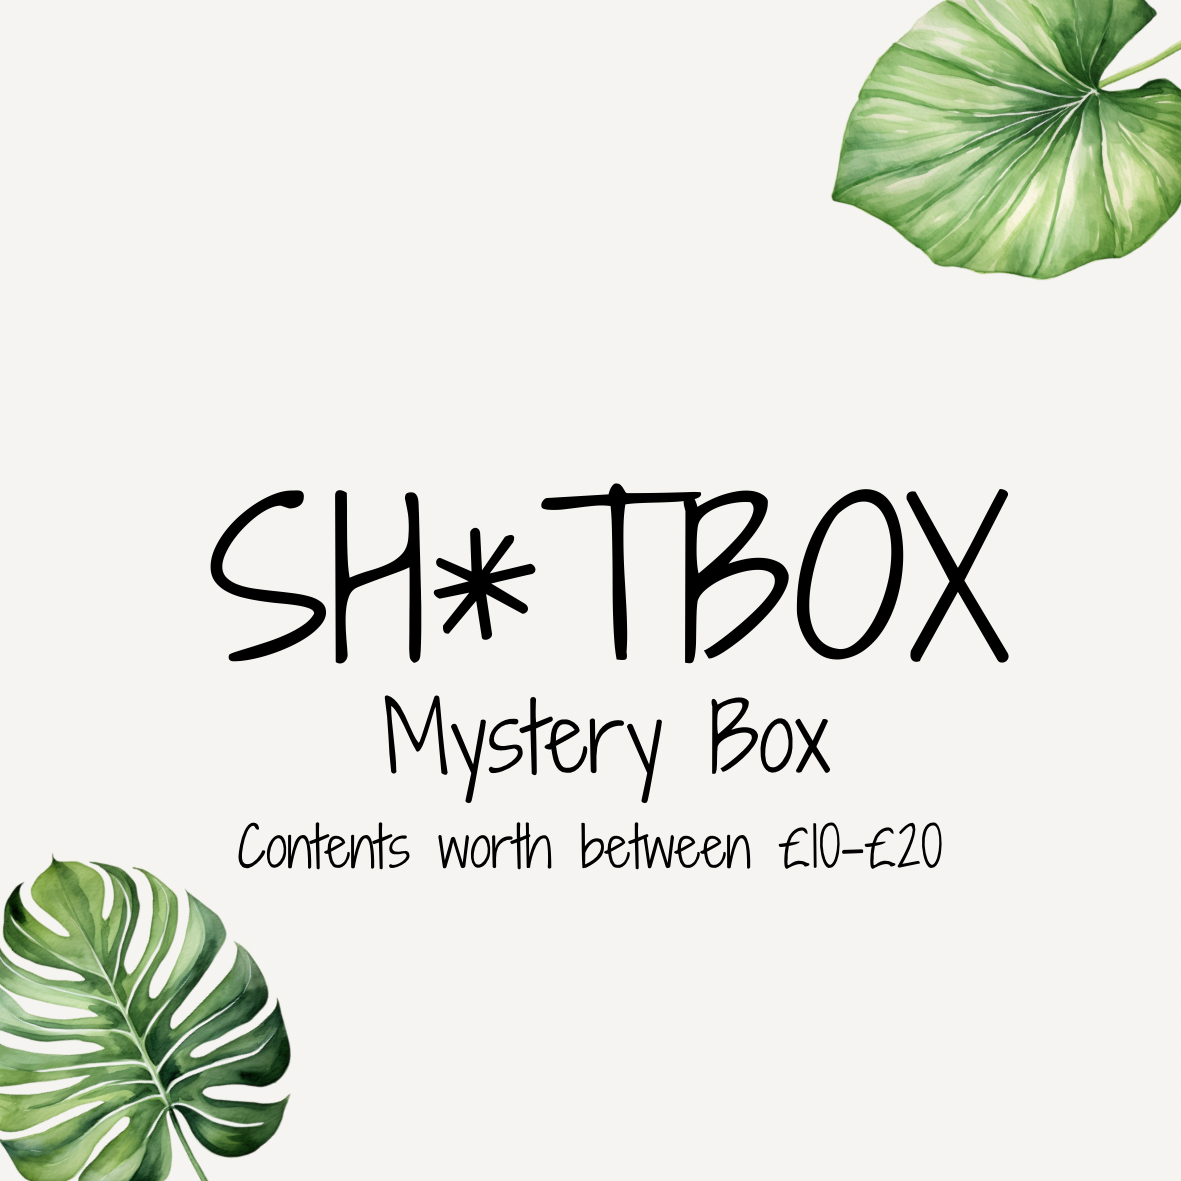 Sh*tbox (Mystery Acrylic Box) worth £20+